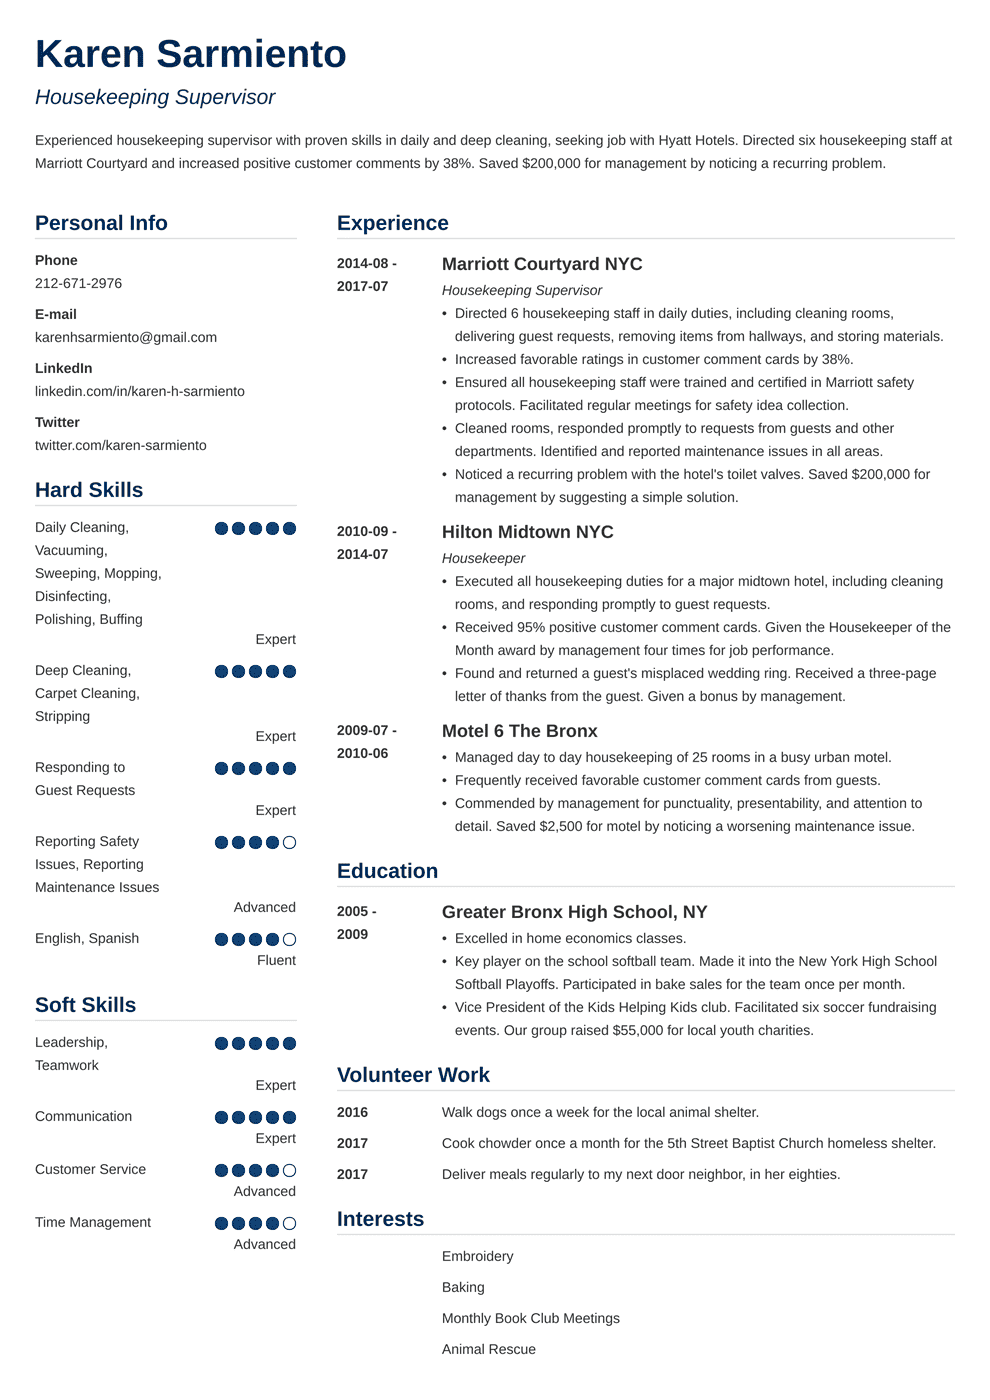 Housekeeping Resume Examples (Job Description + Skills)